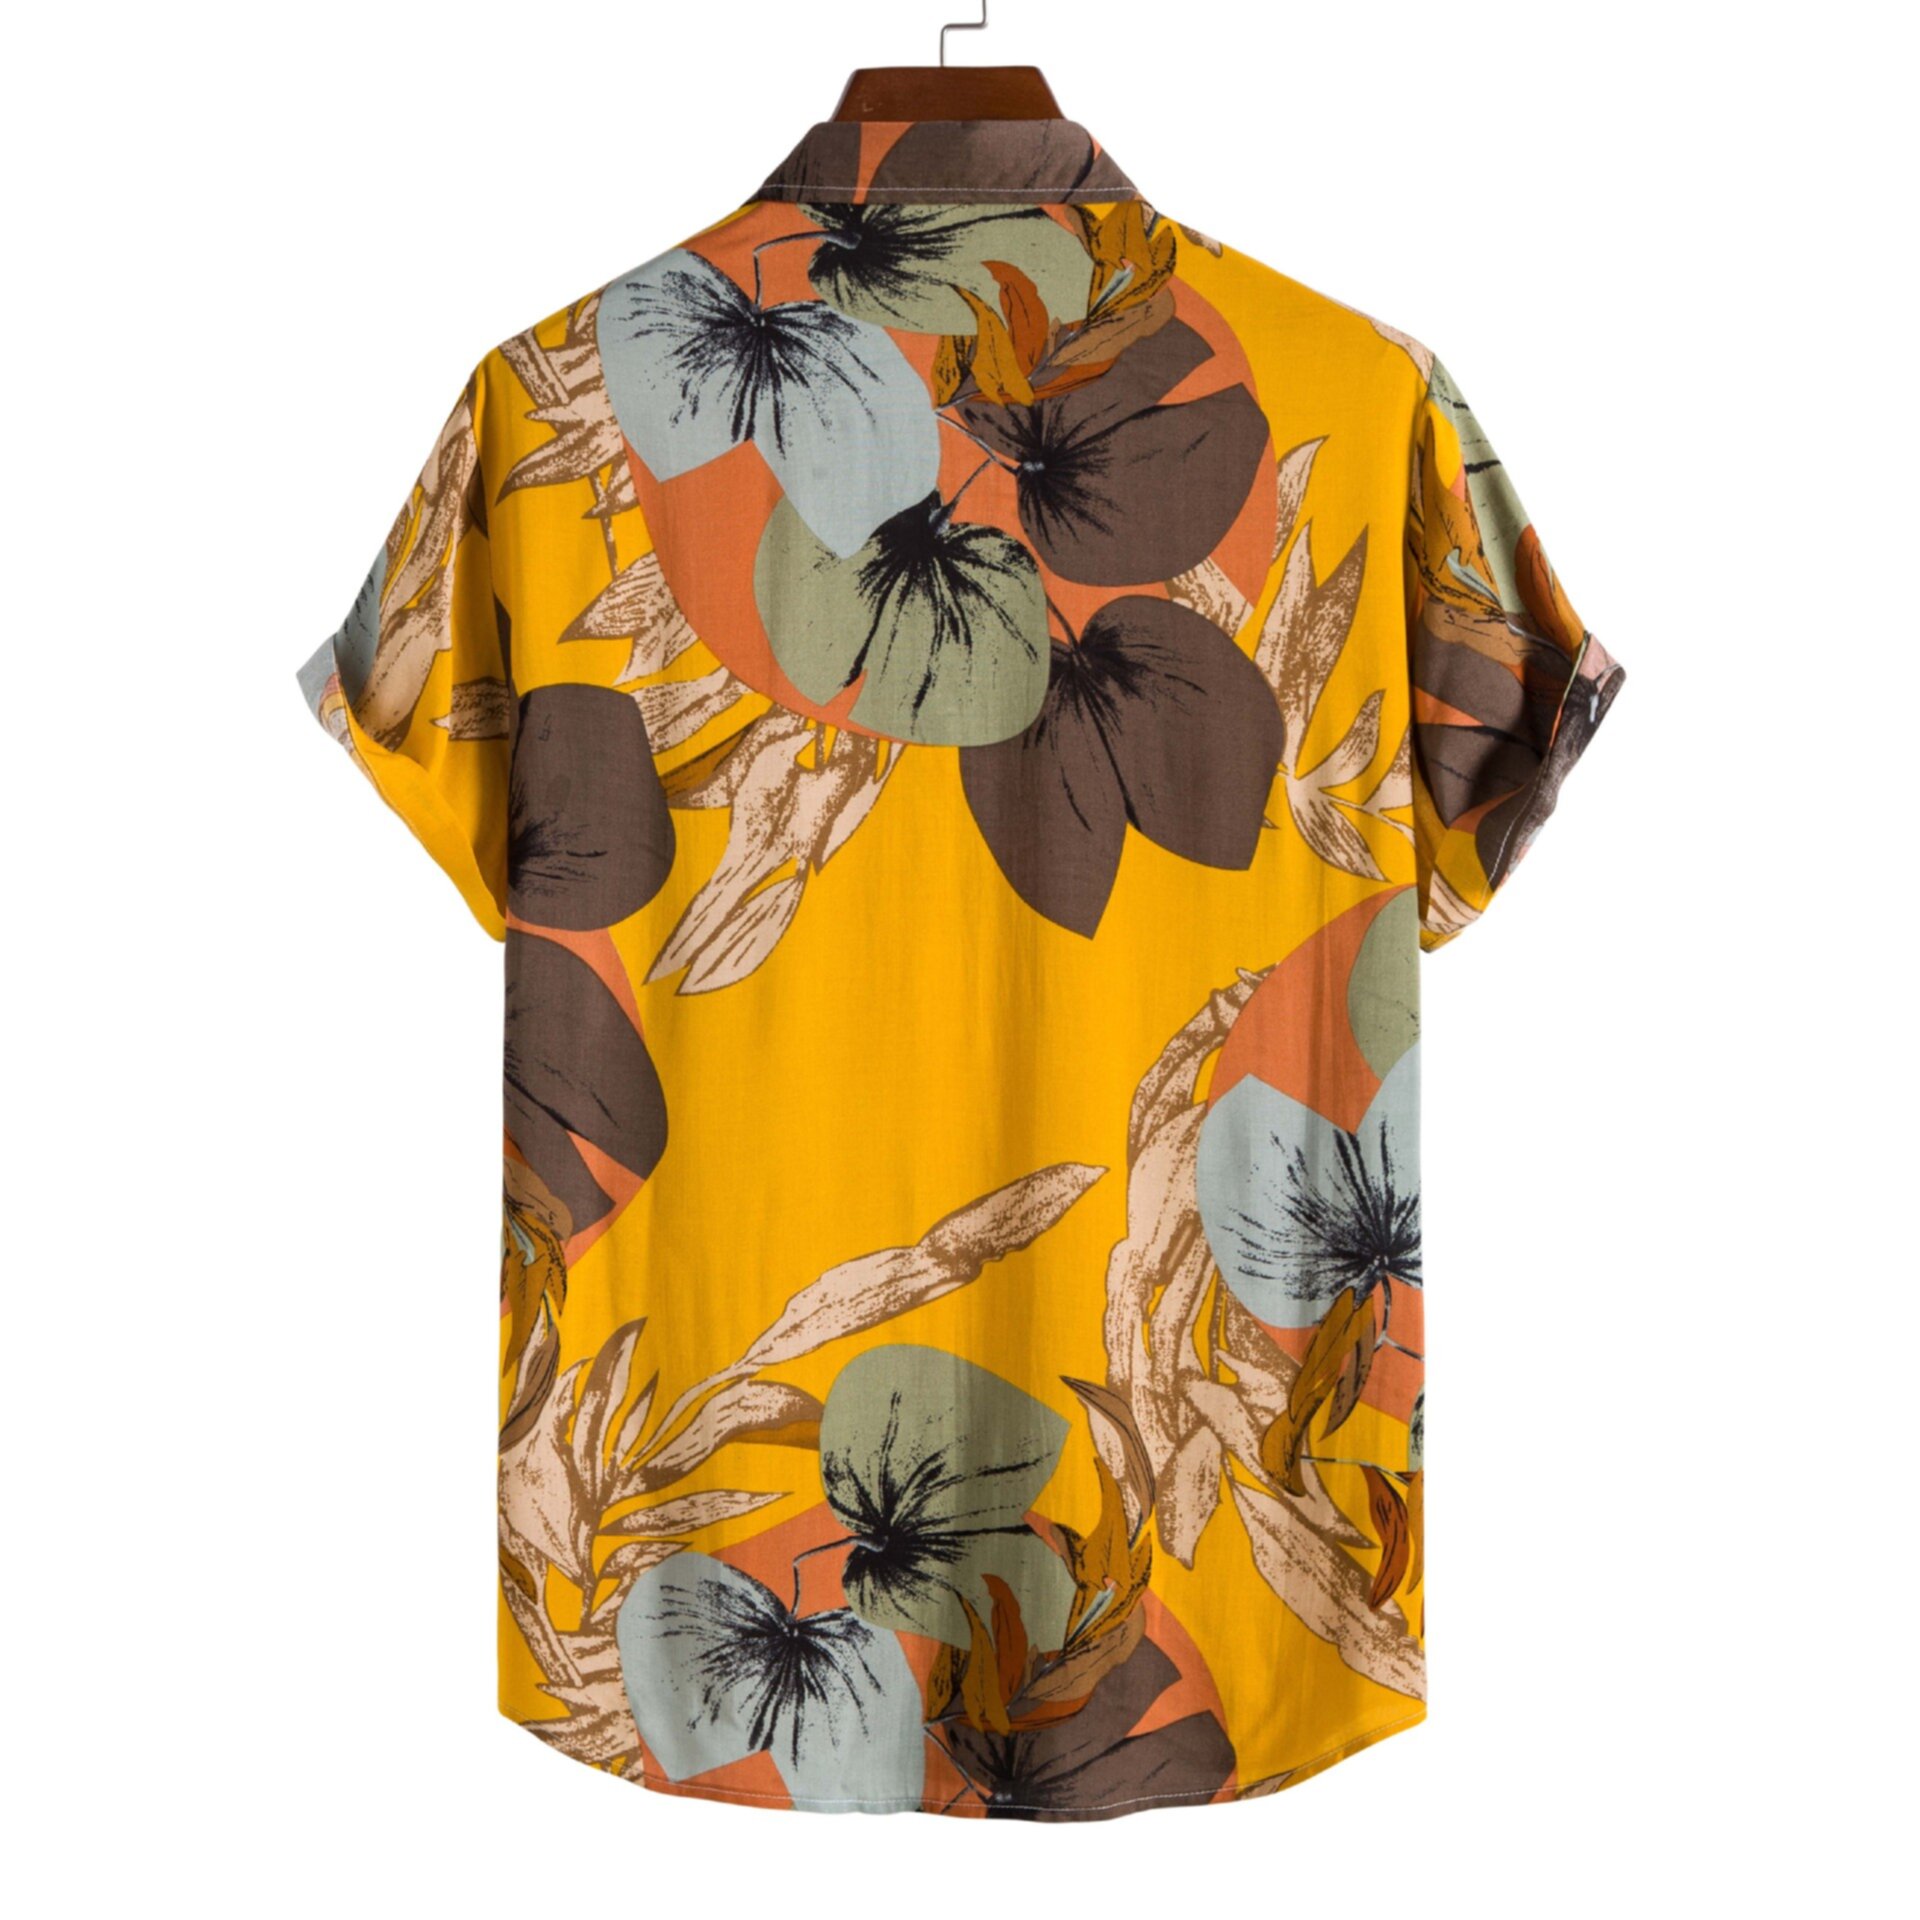 Plant flower pattern men's casual short sleeves shirt